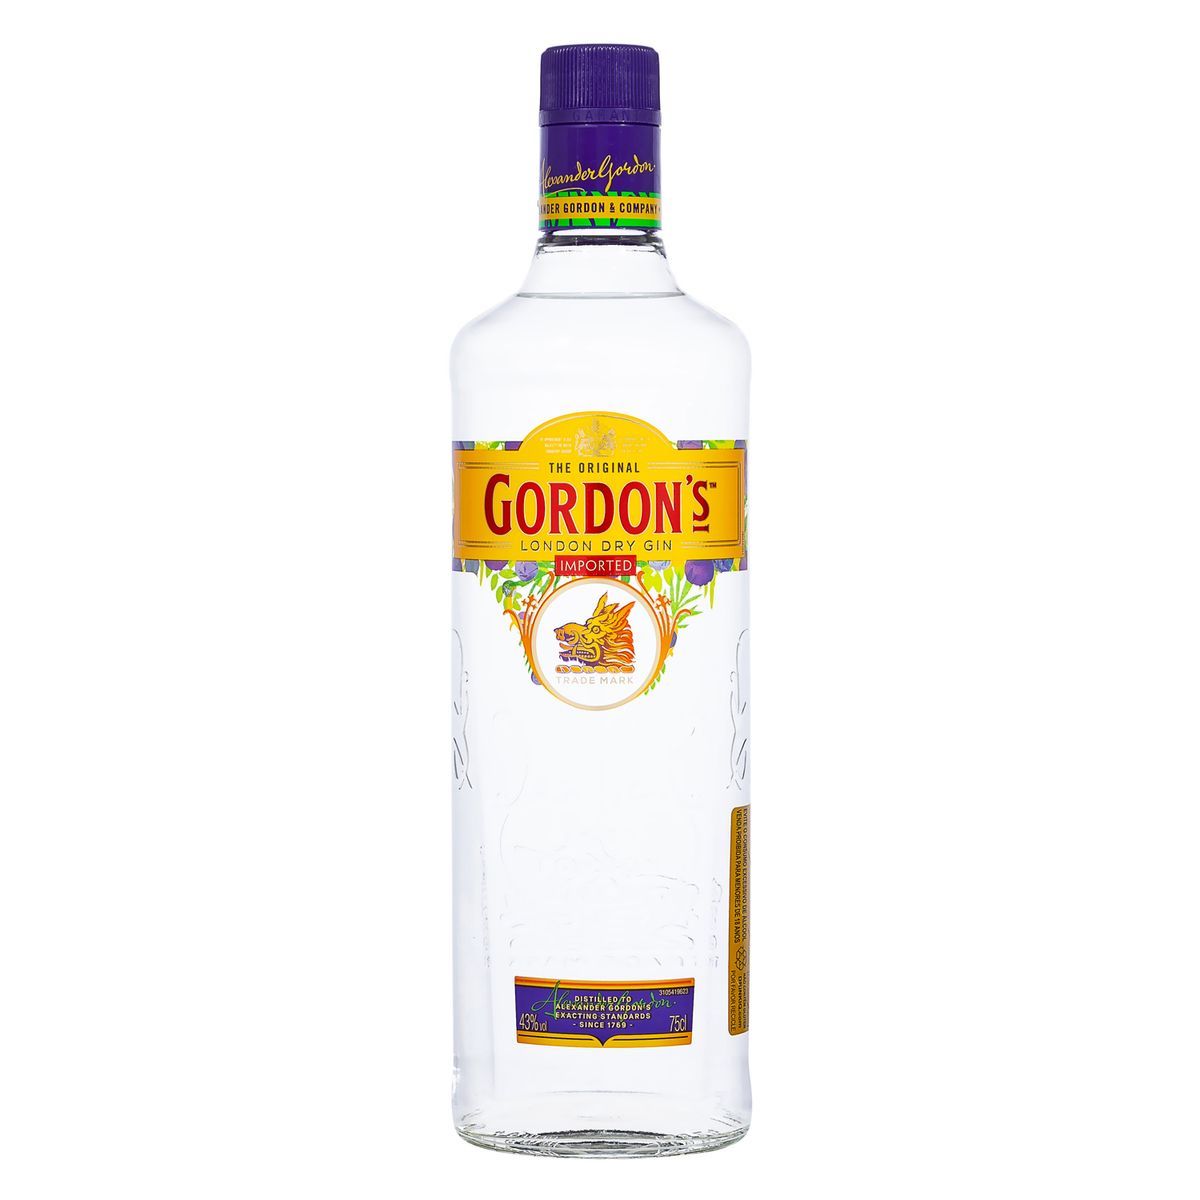 Gin Gordon's The Original 750ml